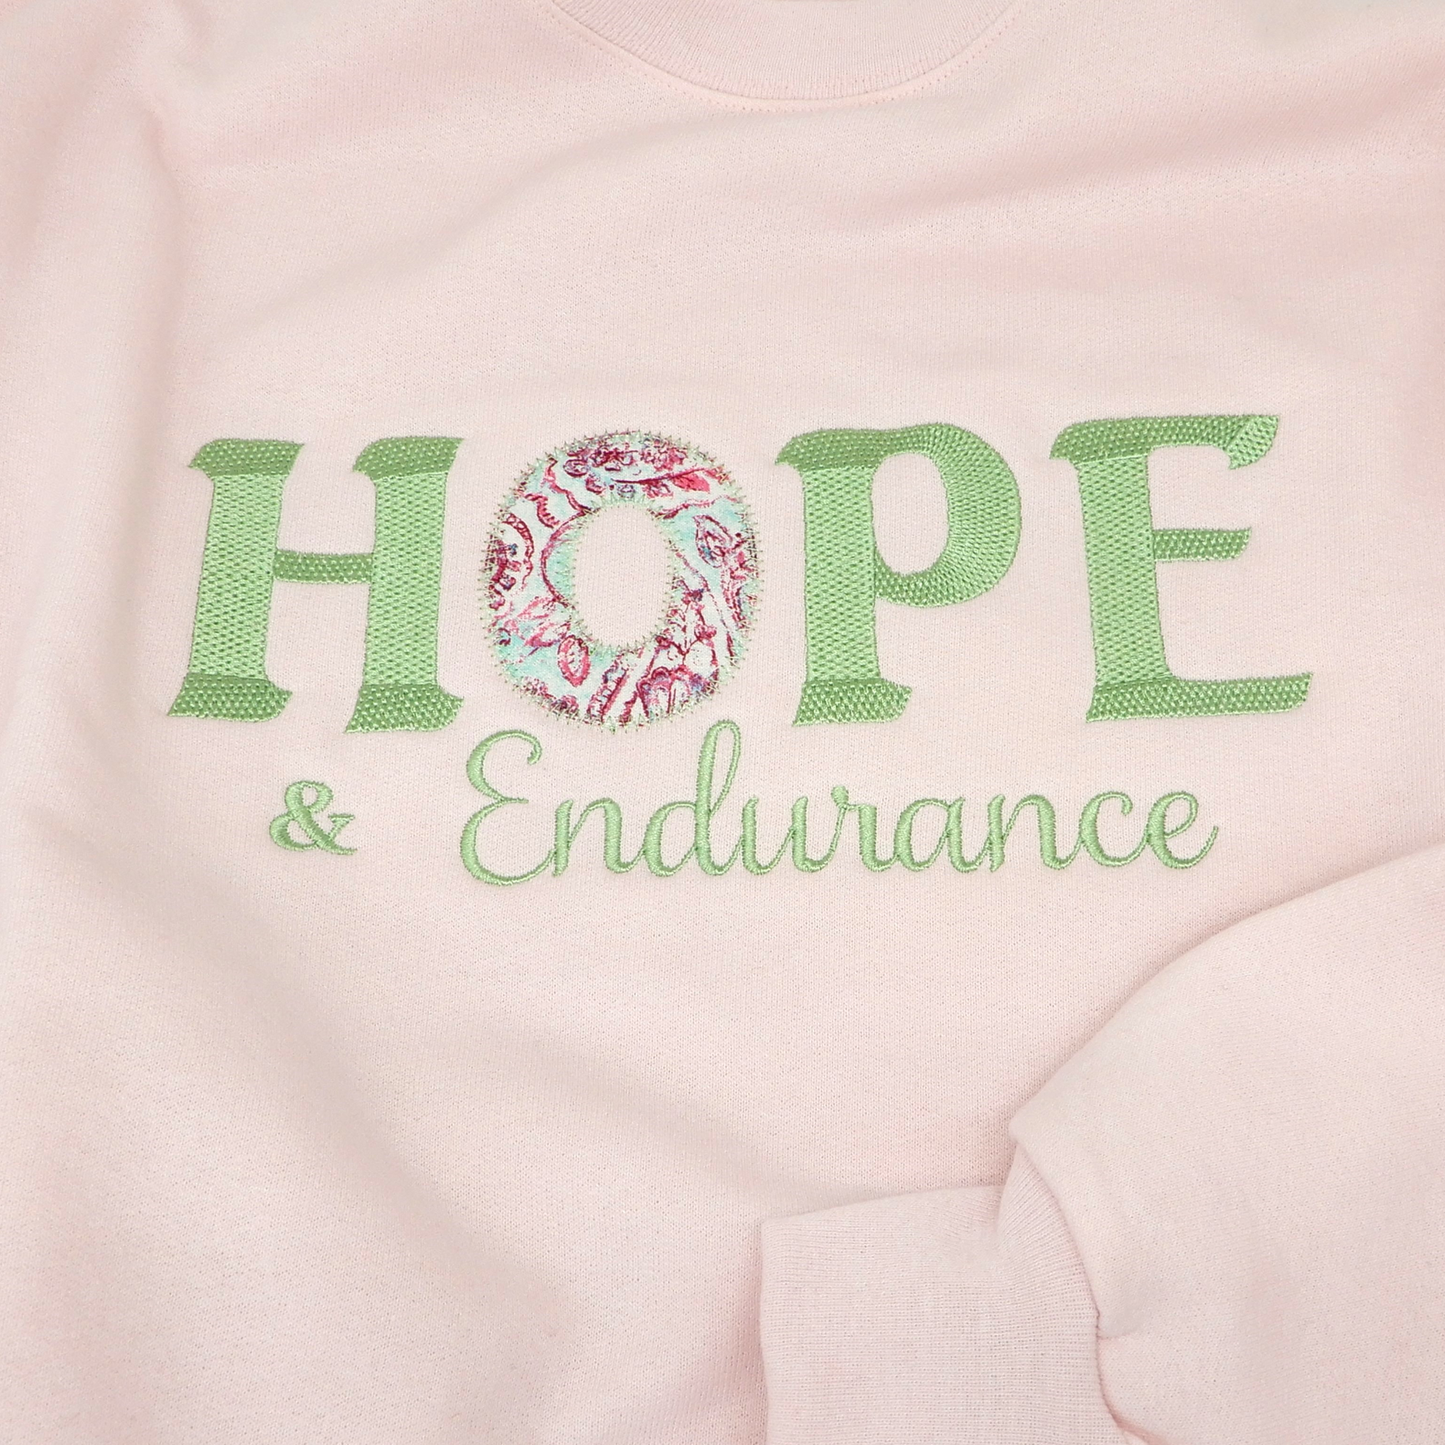 Hope & Endurance Sweatshirt